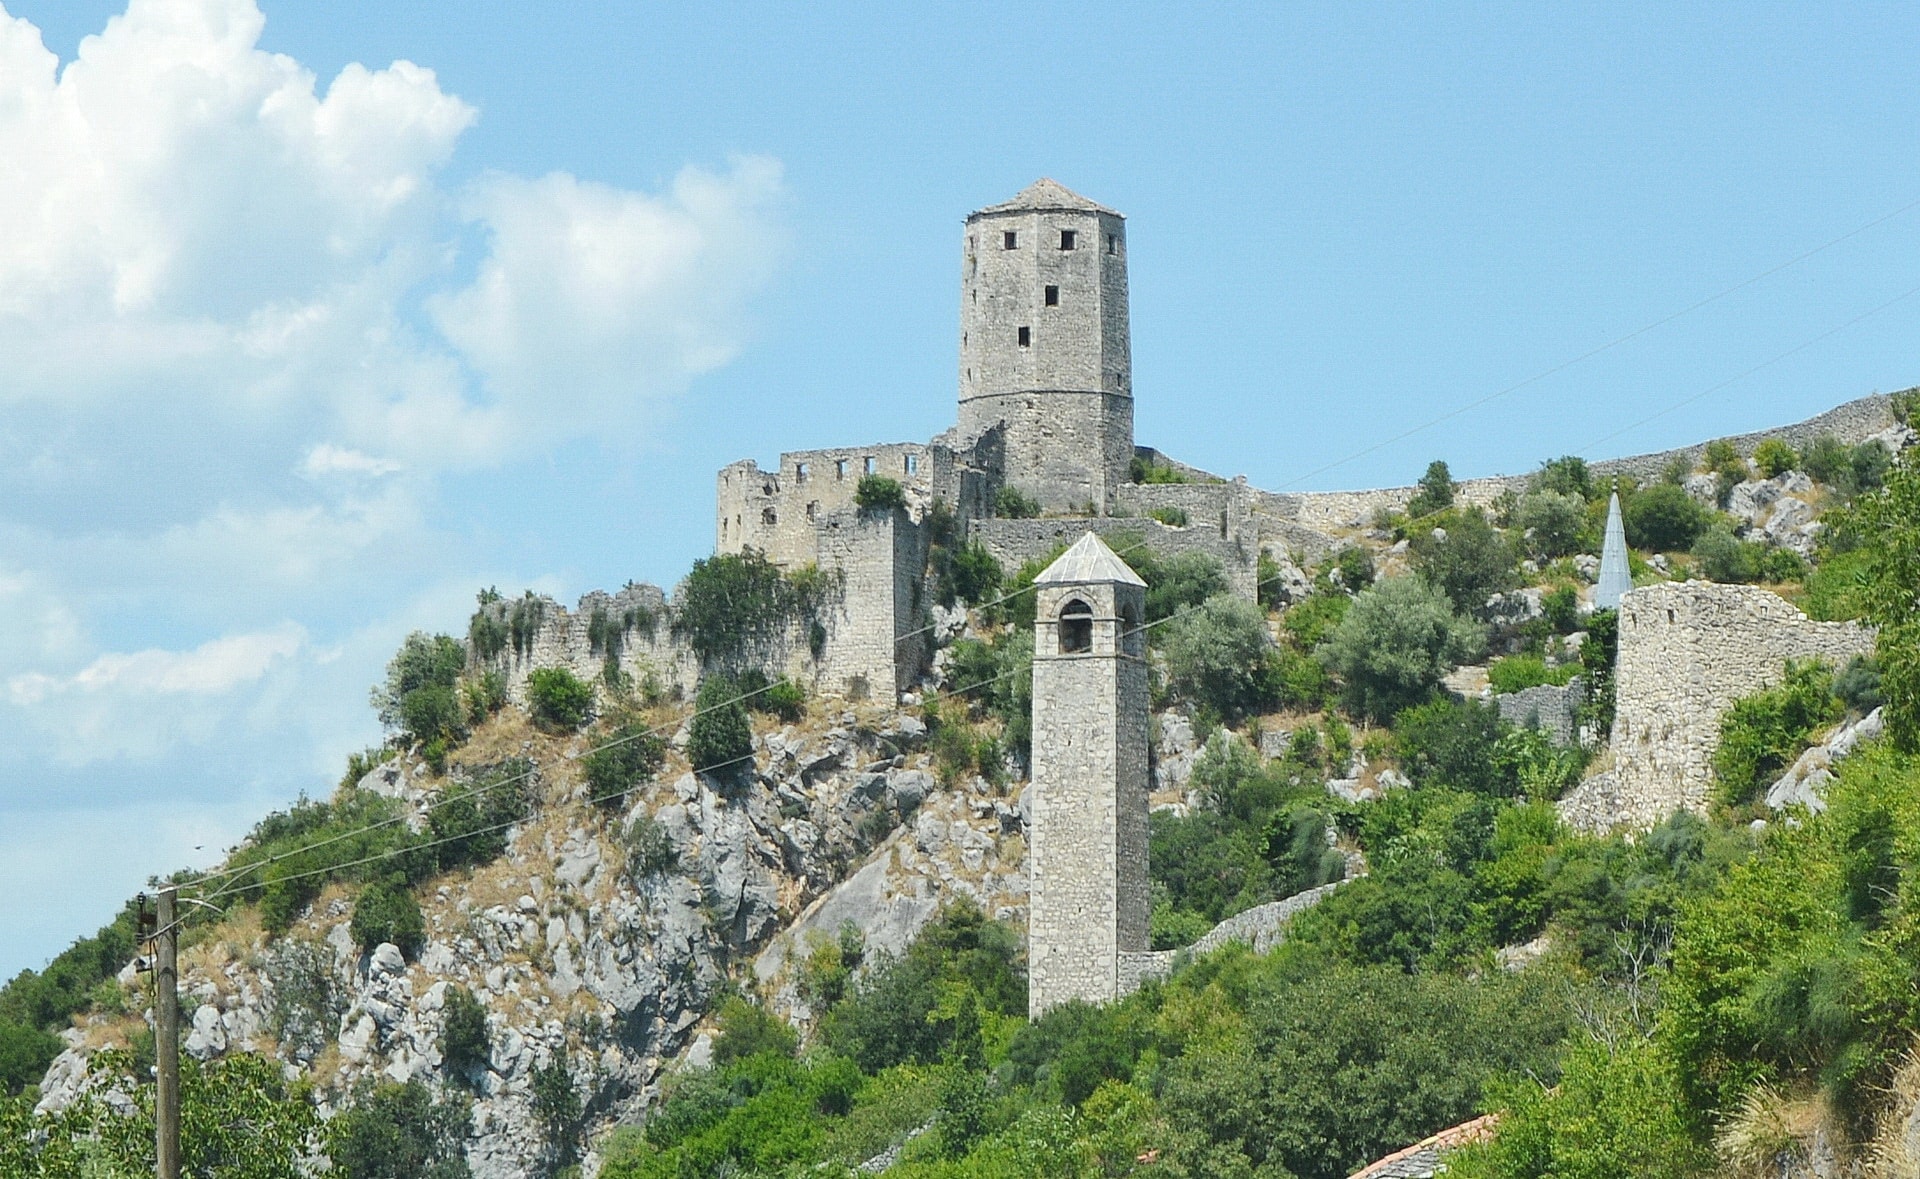 Citadel Počitelj seen when approaching Mostar